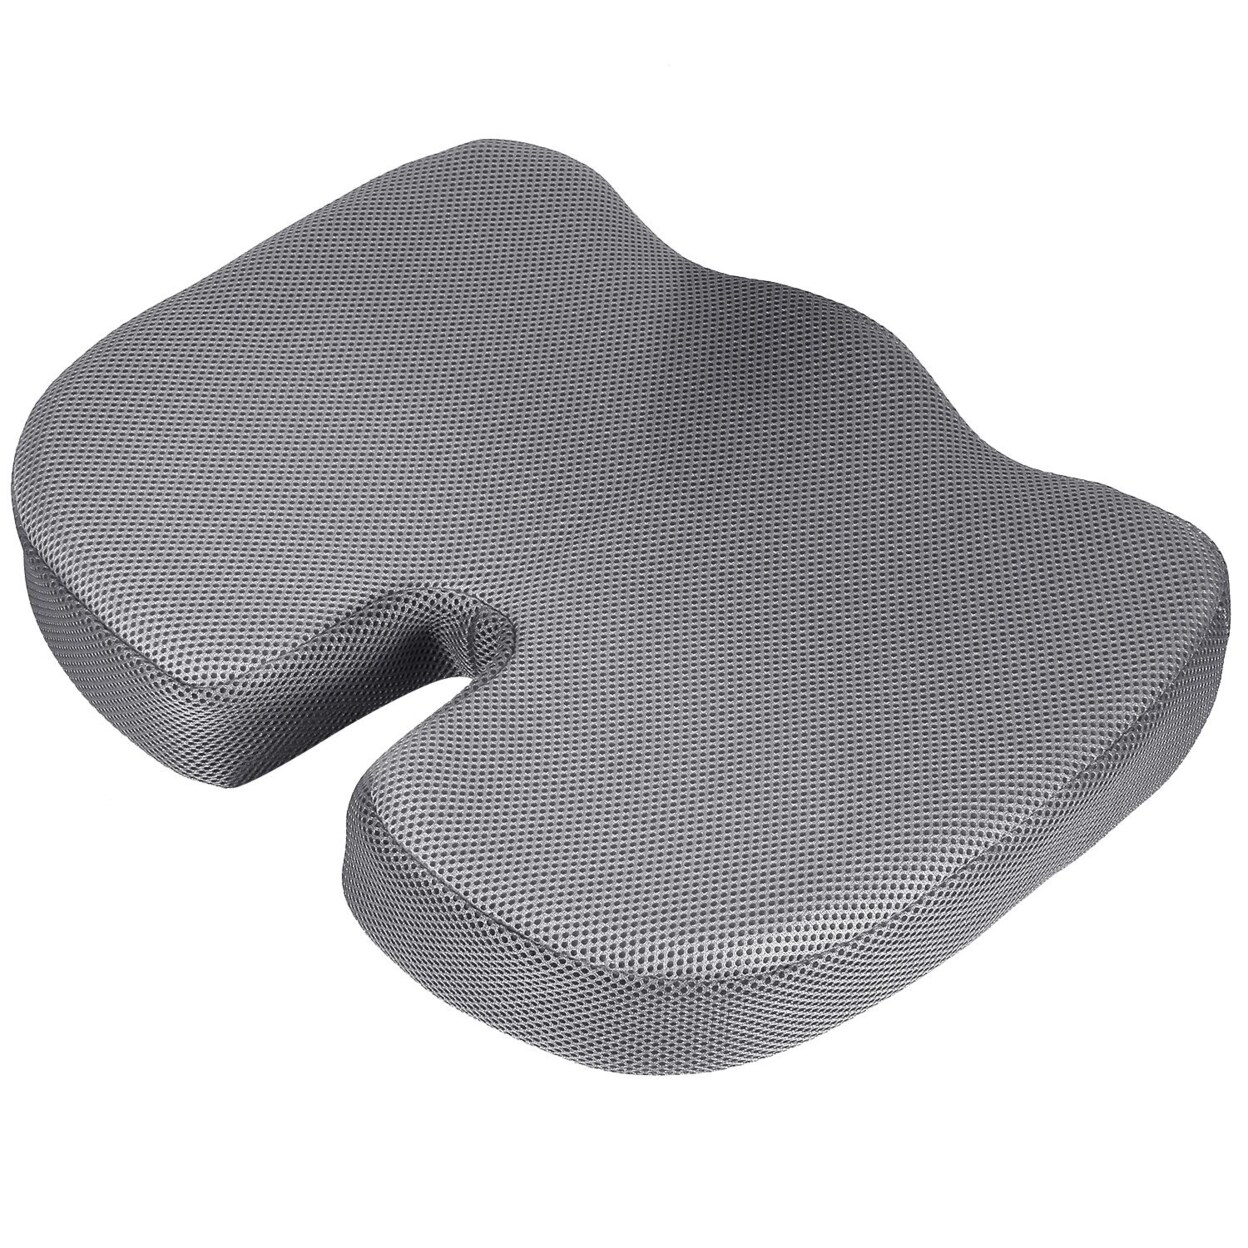 Memory Foam Seat Cushion Orthopedic Coccyx Support Cushions Office